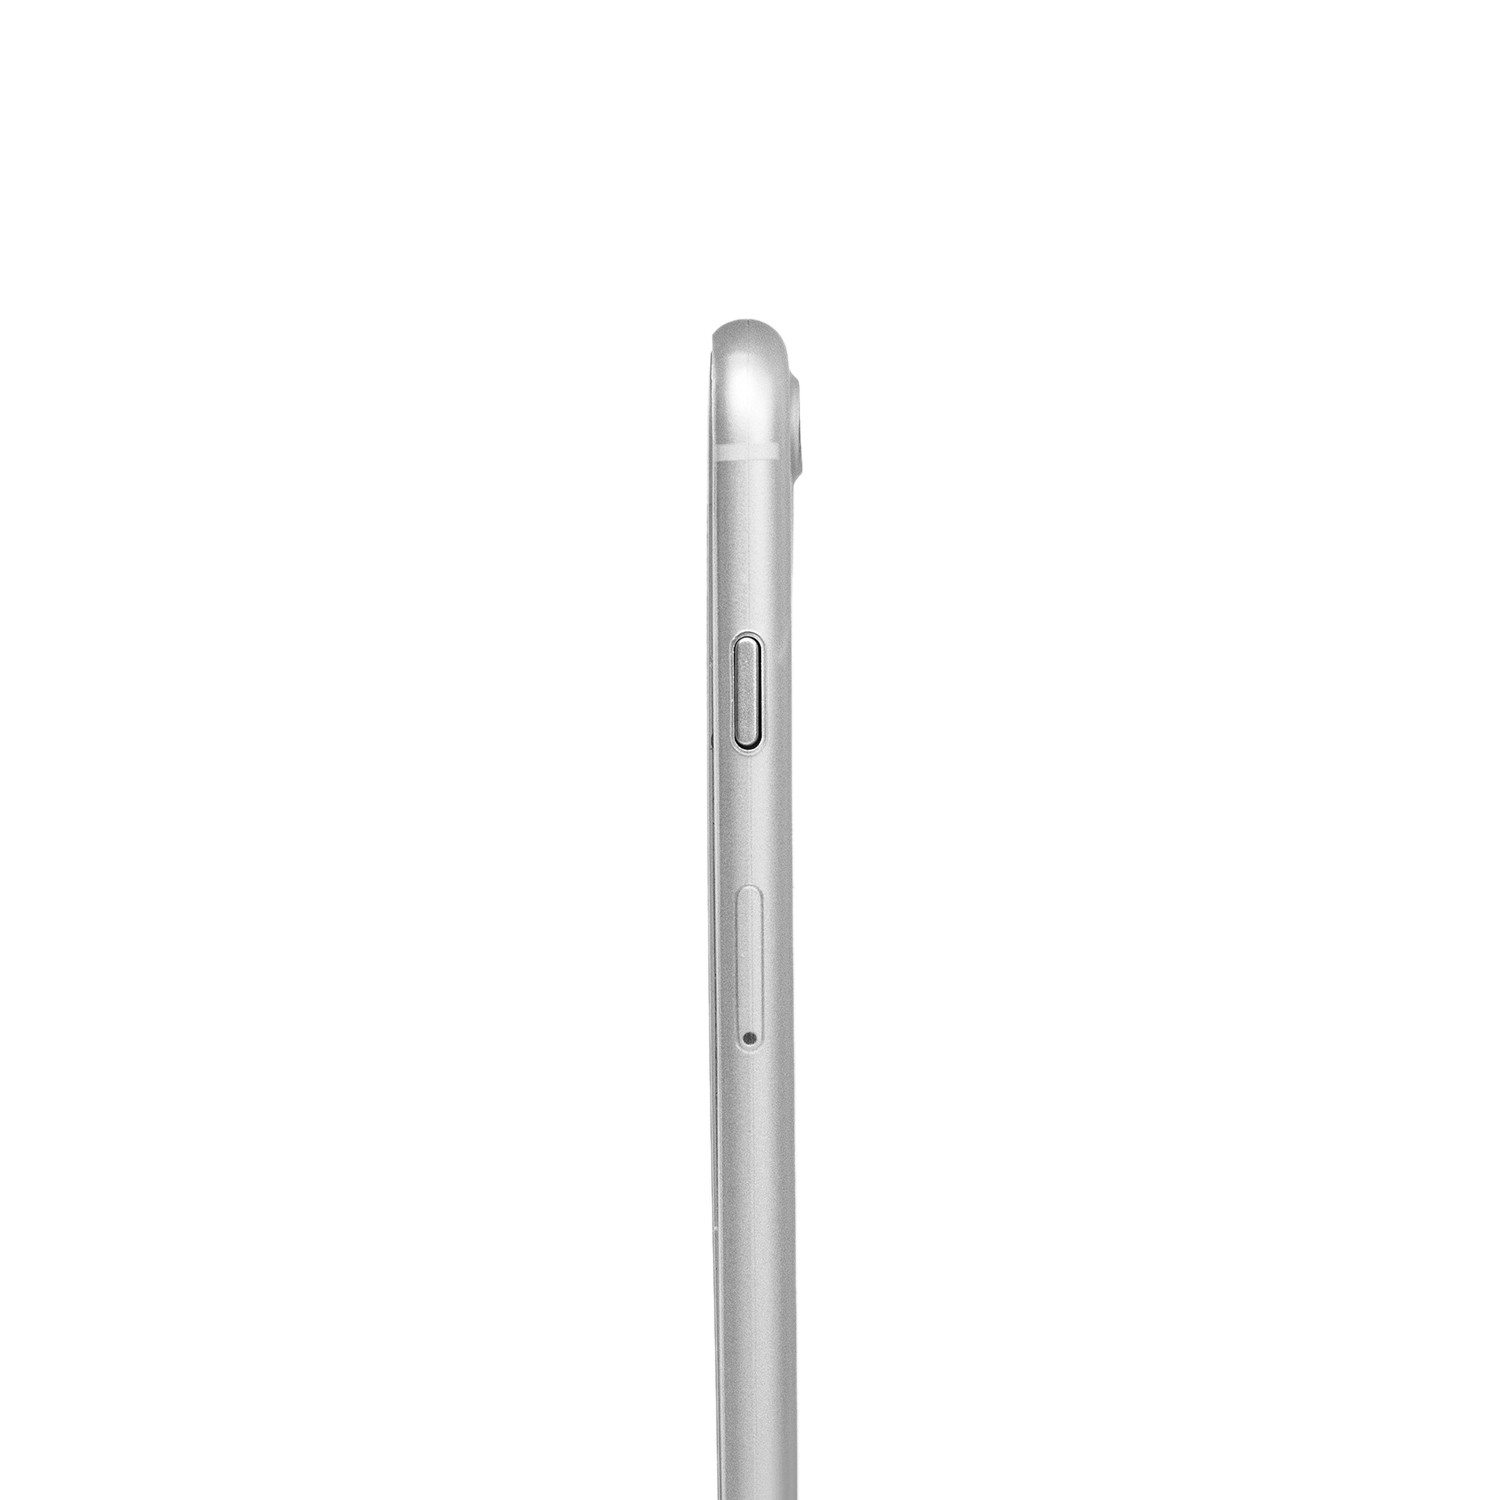 iPhone 7 Plus / 8 Plus Ultra Thin Phone Case